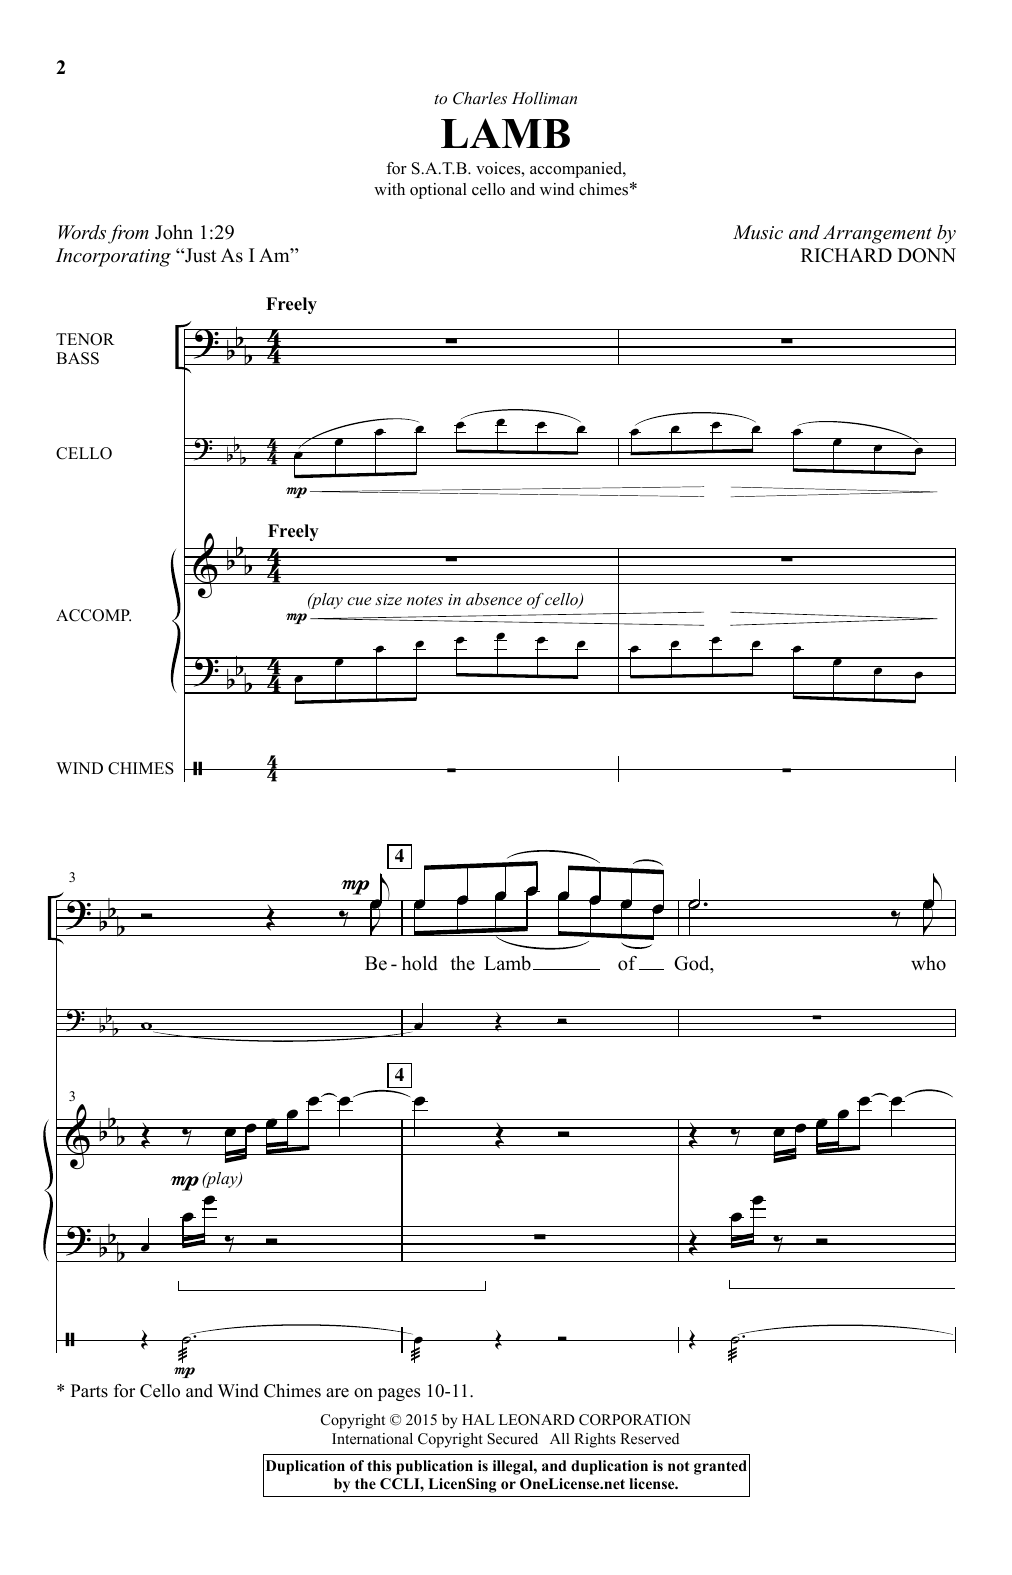 Richard Donn Lamb Sheet Music Notes & Chords for SATB - Download or Print PDF